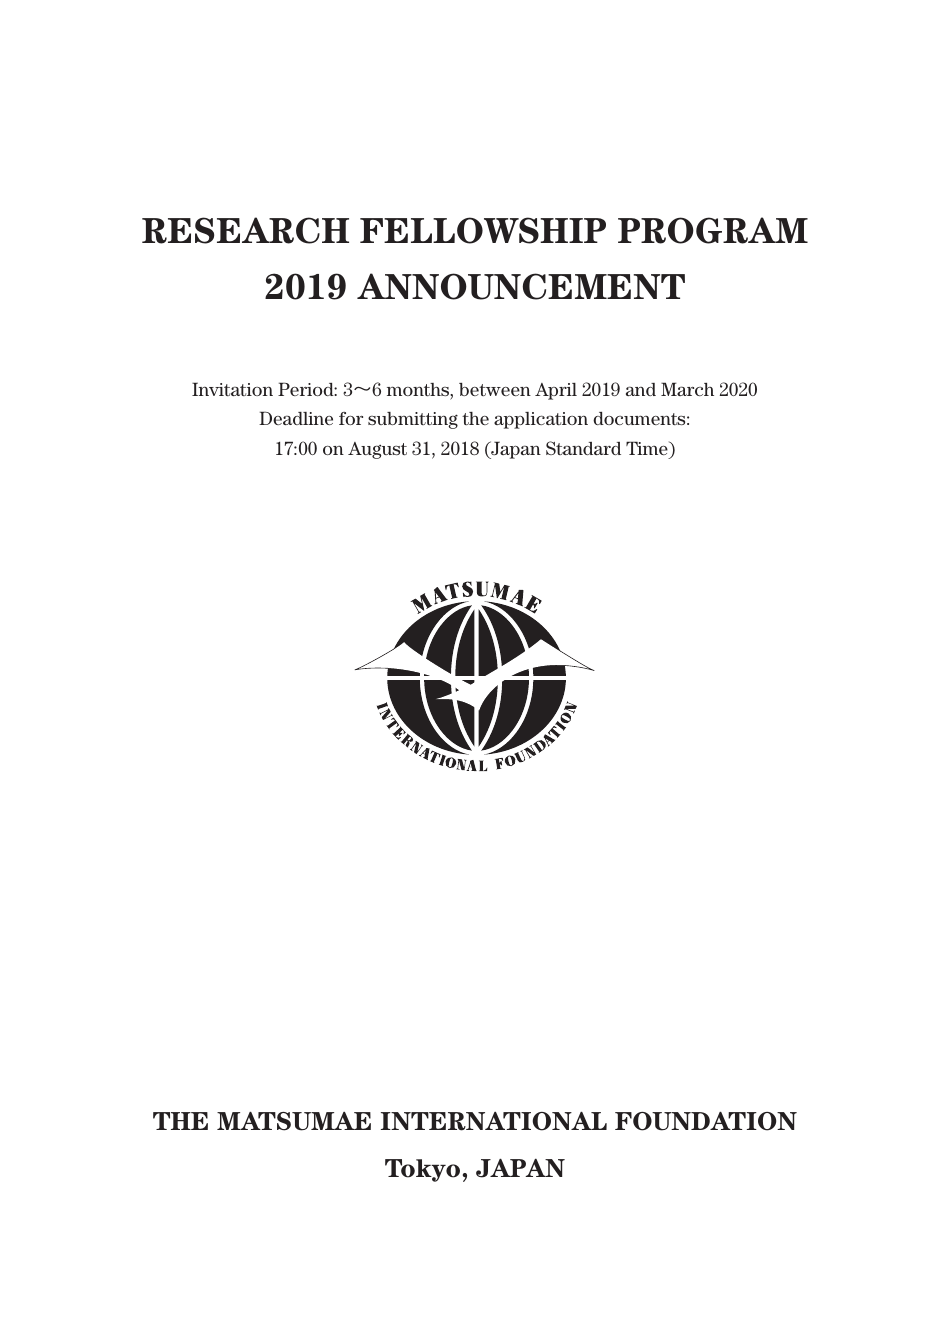 Matsumae International Foundation Research Fellowship Program 2019 Announcement document image preview